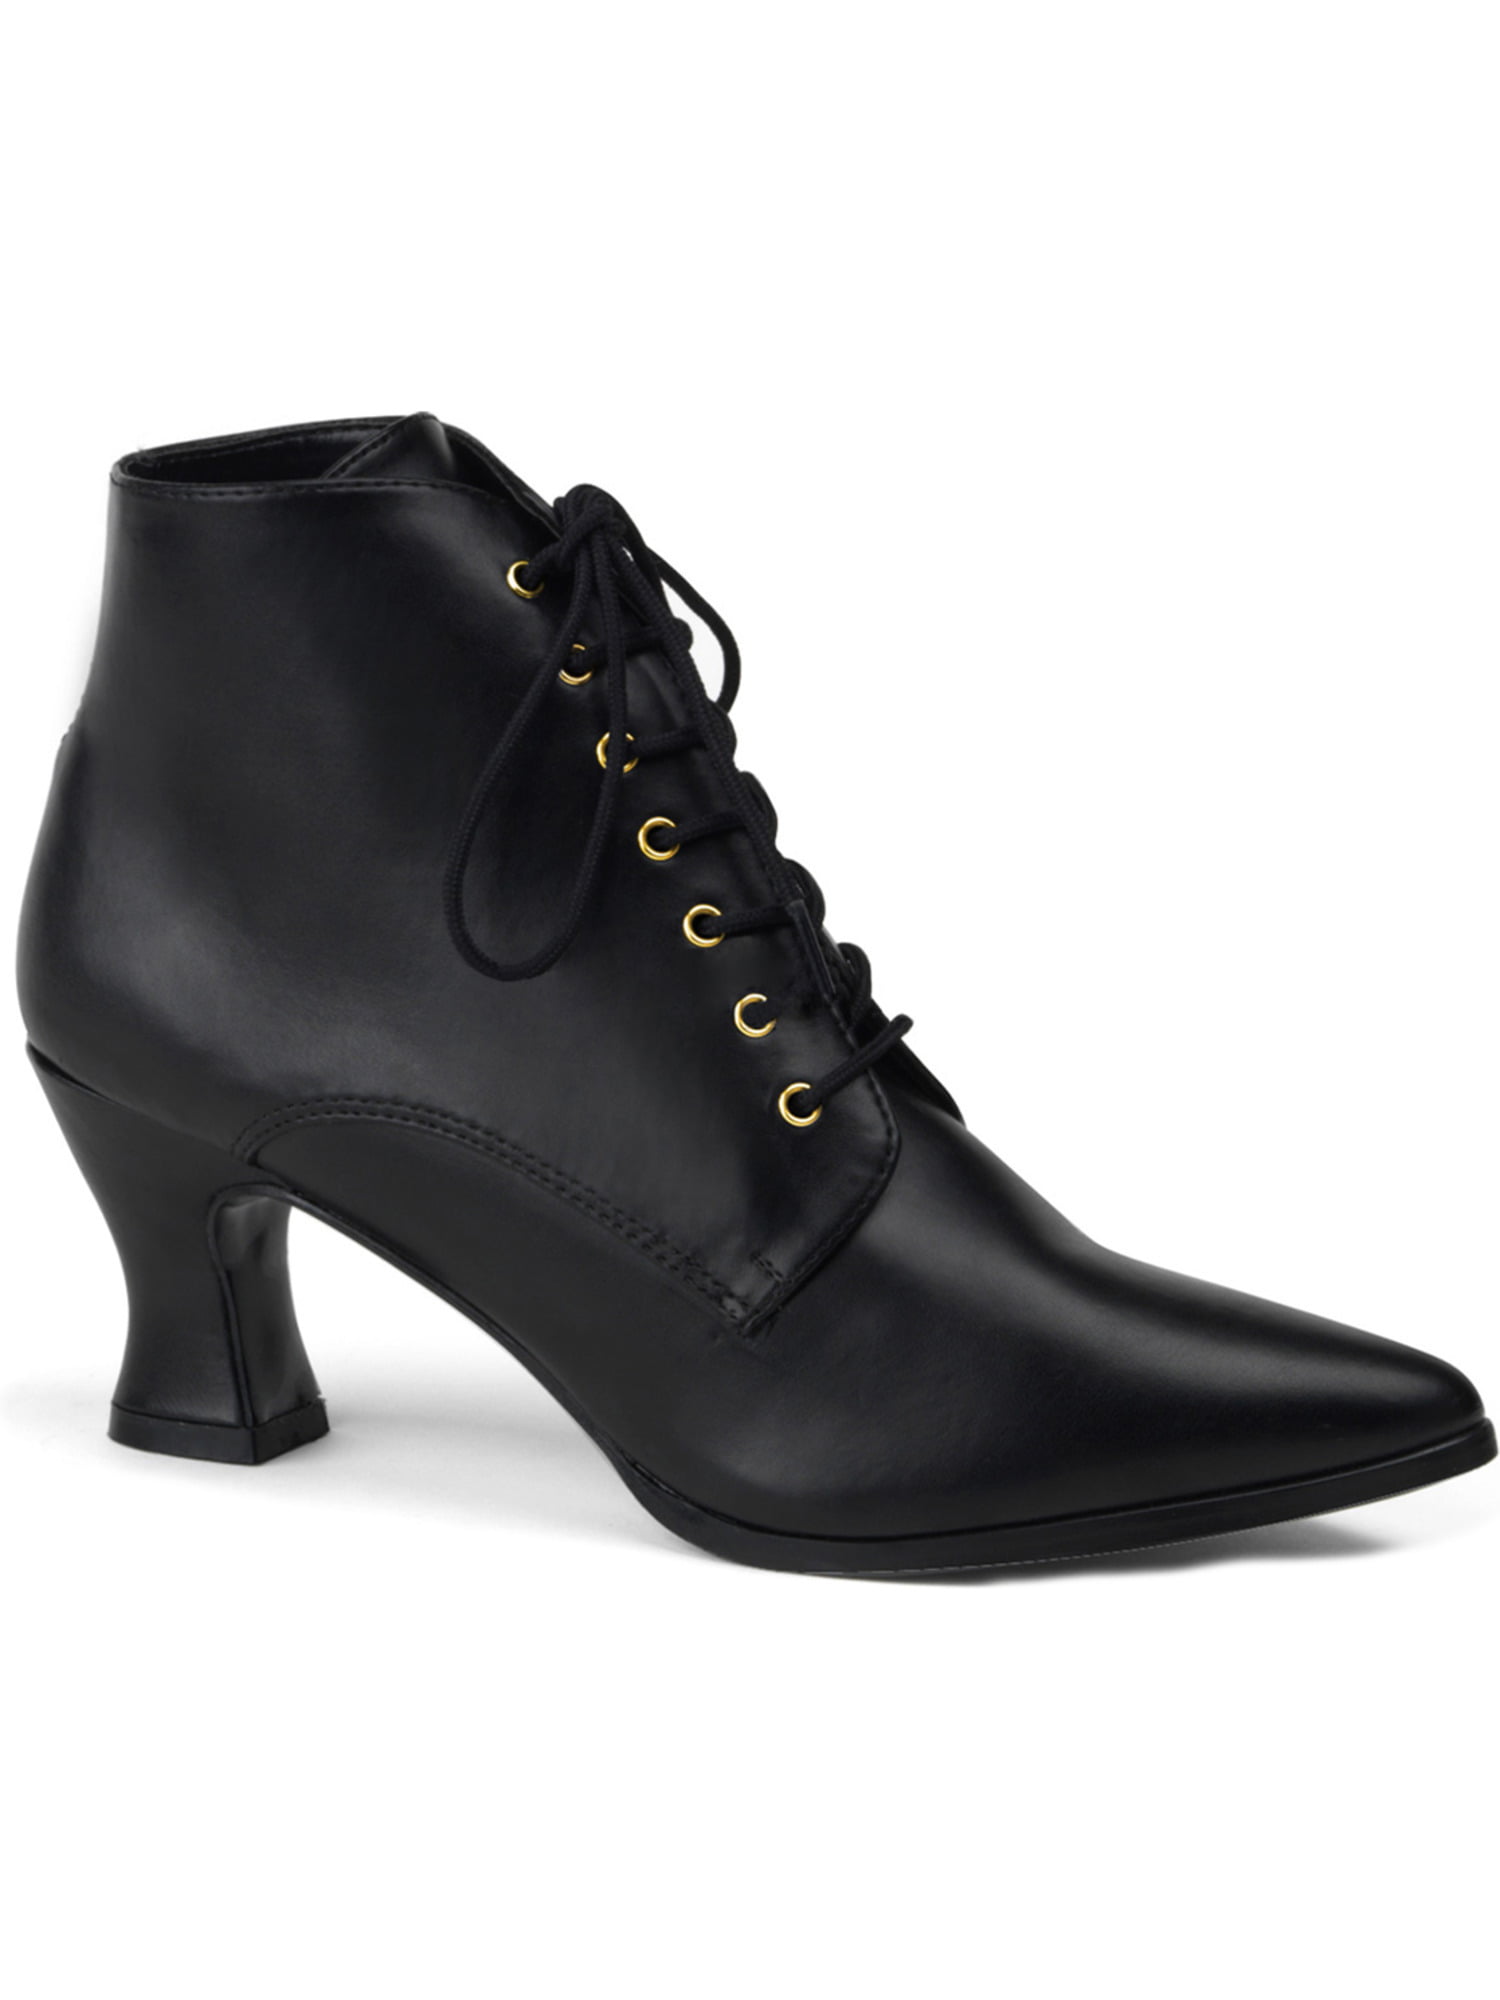 Funtasma - Women's Sexy Victorian High Heel Low Ankle Boots Costume Dress Up Black - Walmart.com